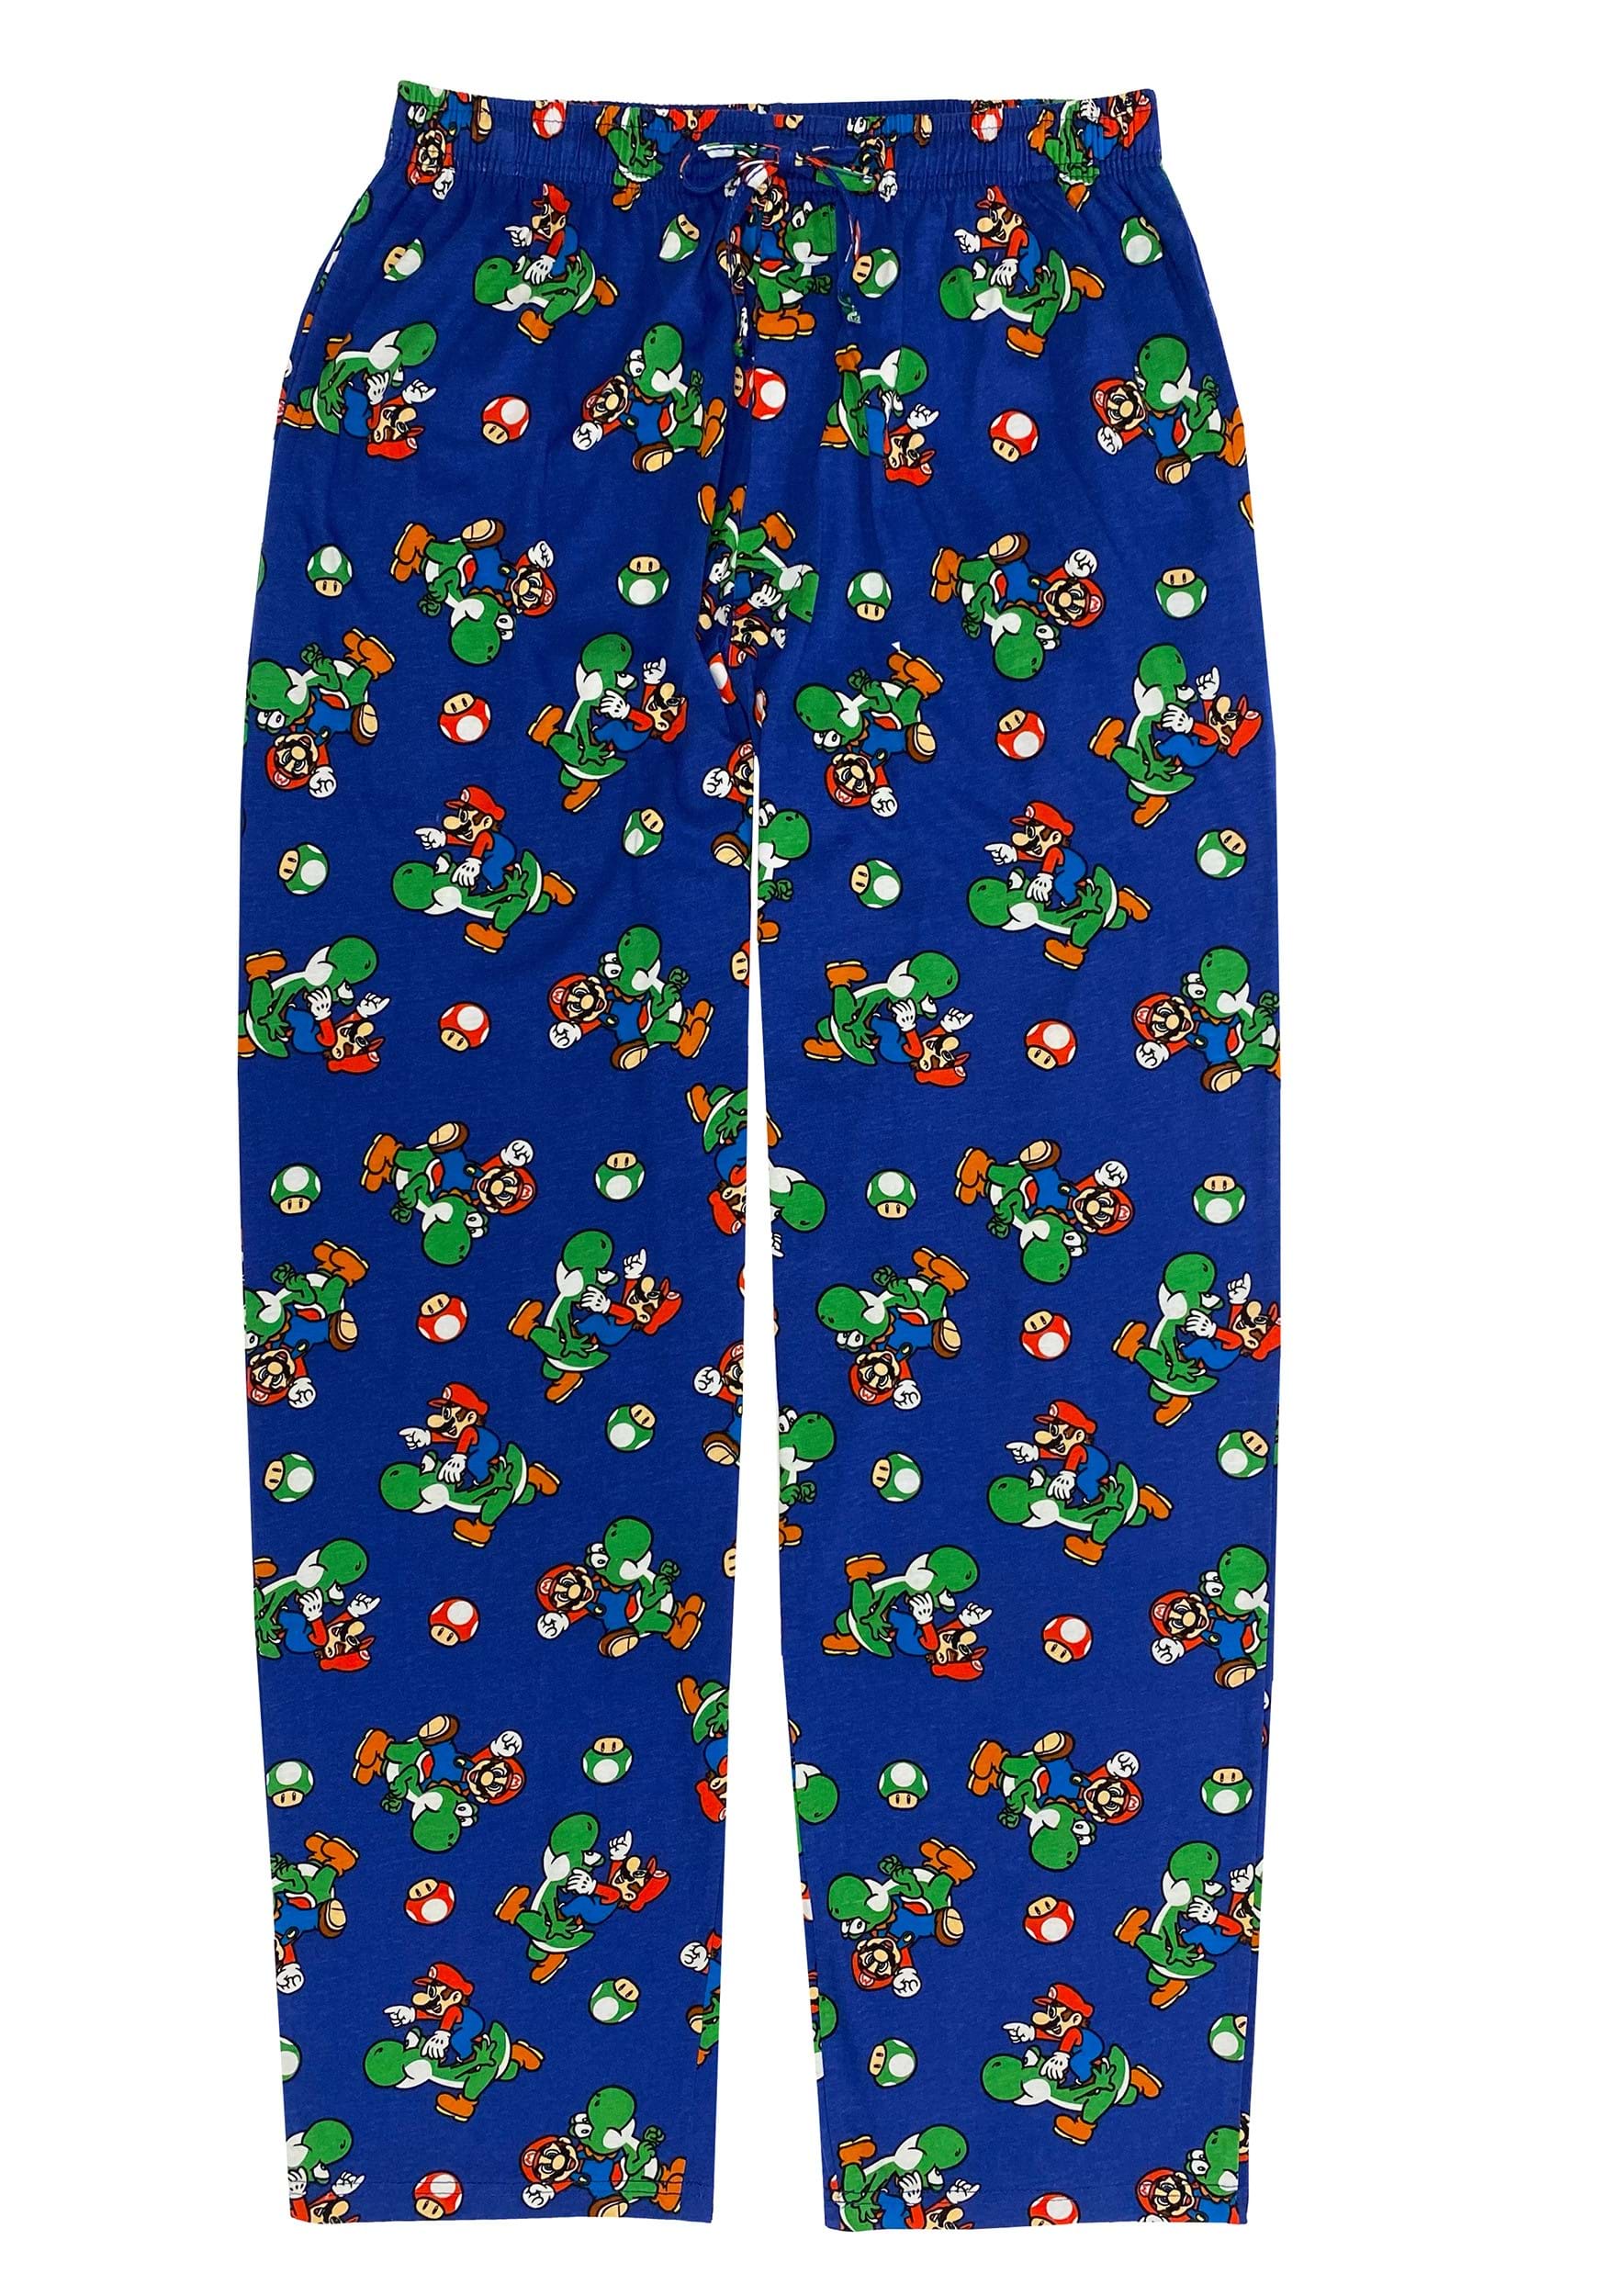 Mario and Yoshi Kinoko Toss Knit Pant